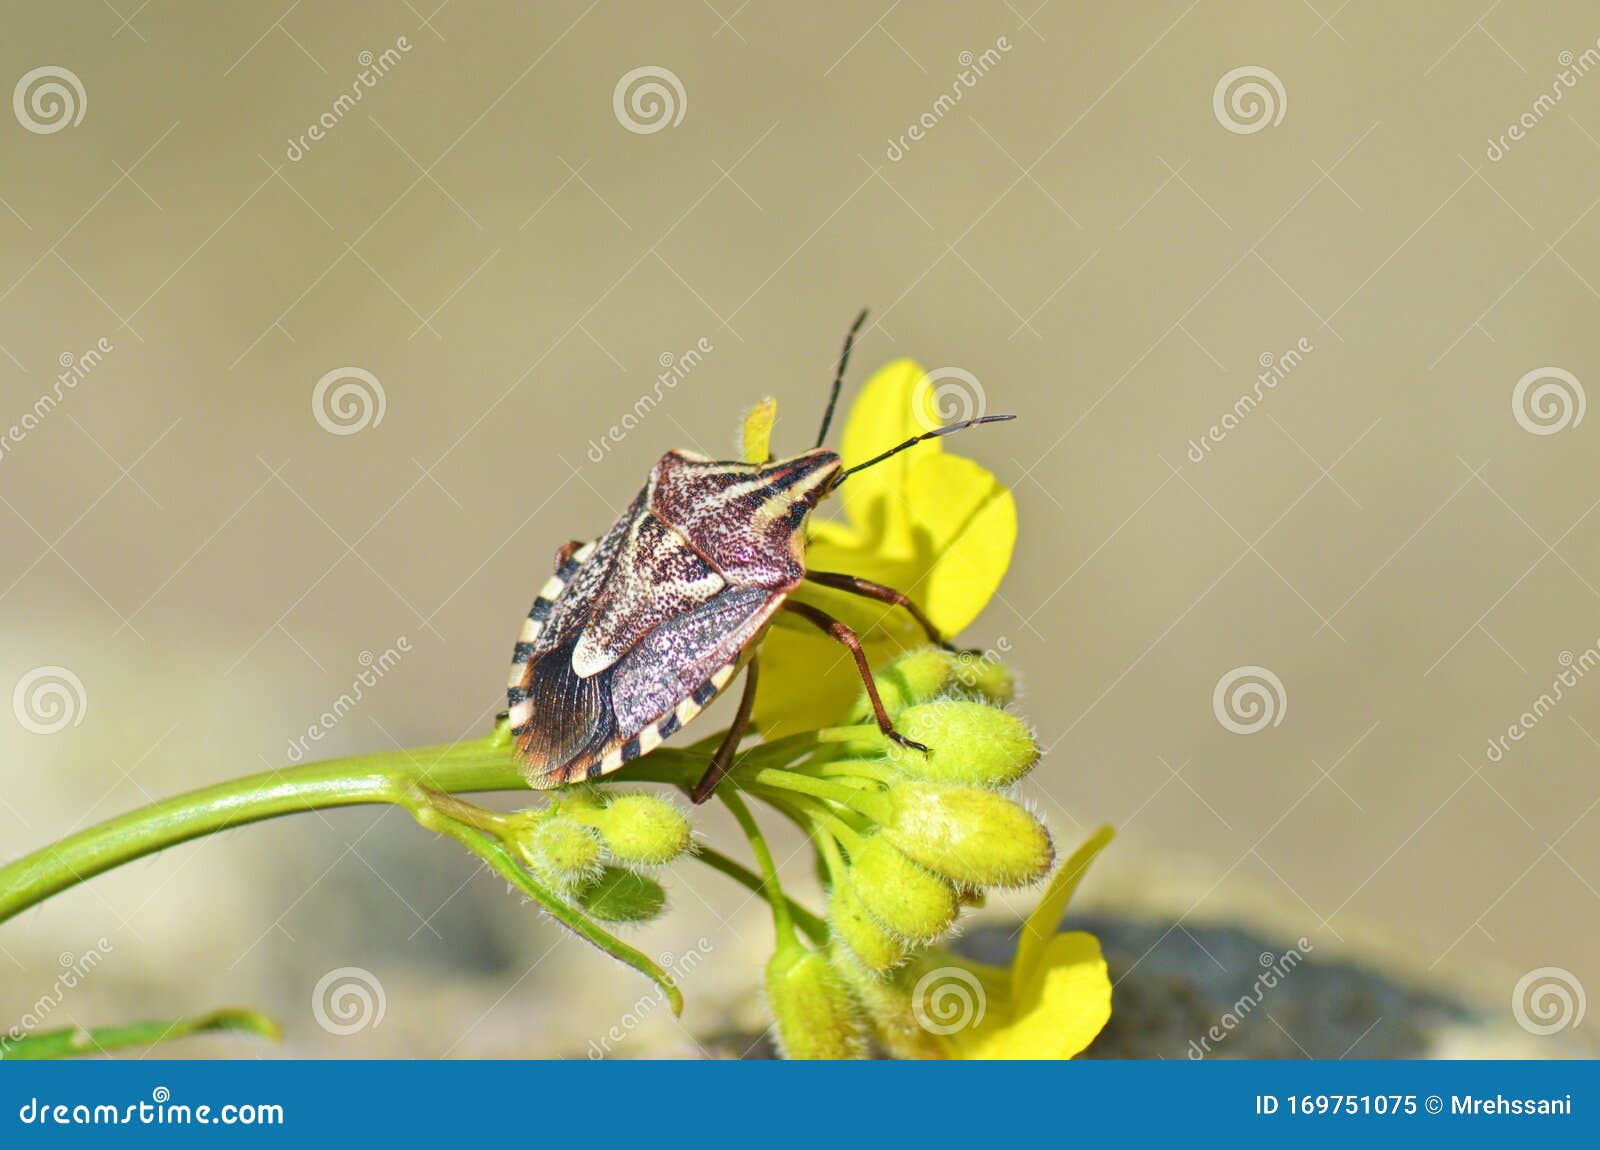 shield bug or stink bug on yellow flower , hemiptera insect , pentatomidae